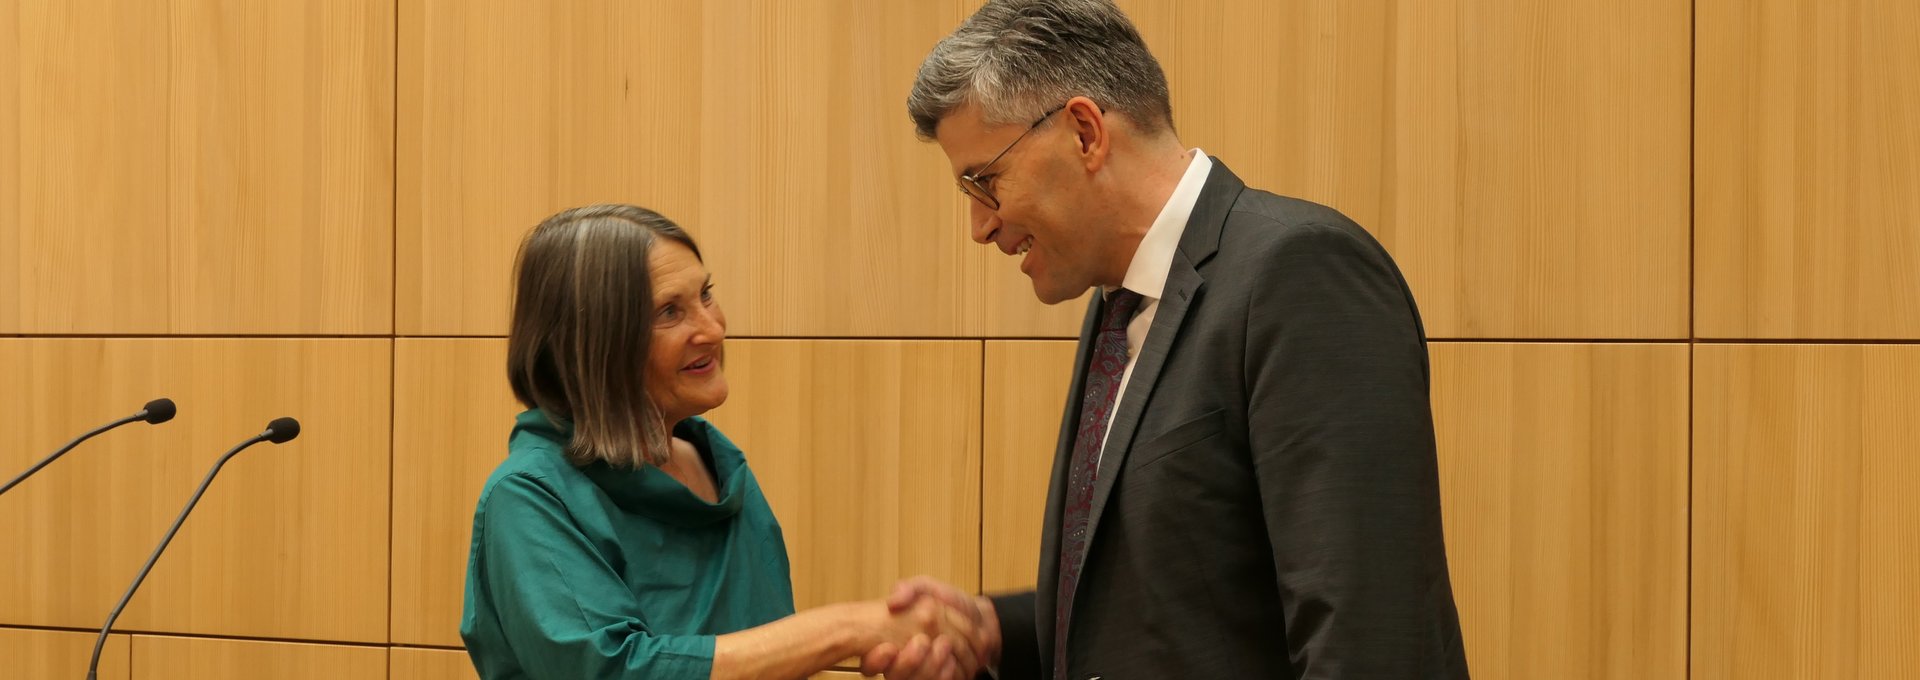 Regierungspräsidentin Bärbel Schäfer gratuliert Landrat Dr. Kistler zur Vereidigung